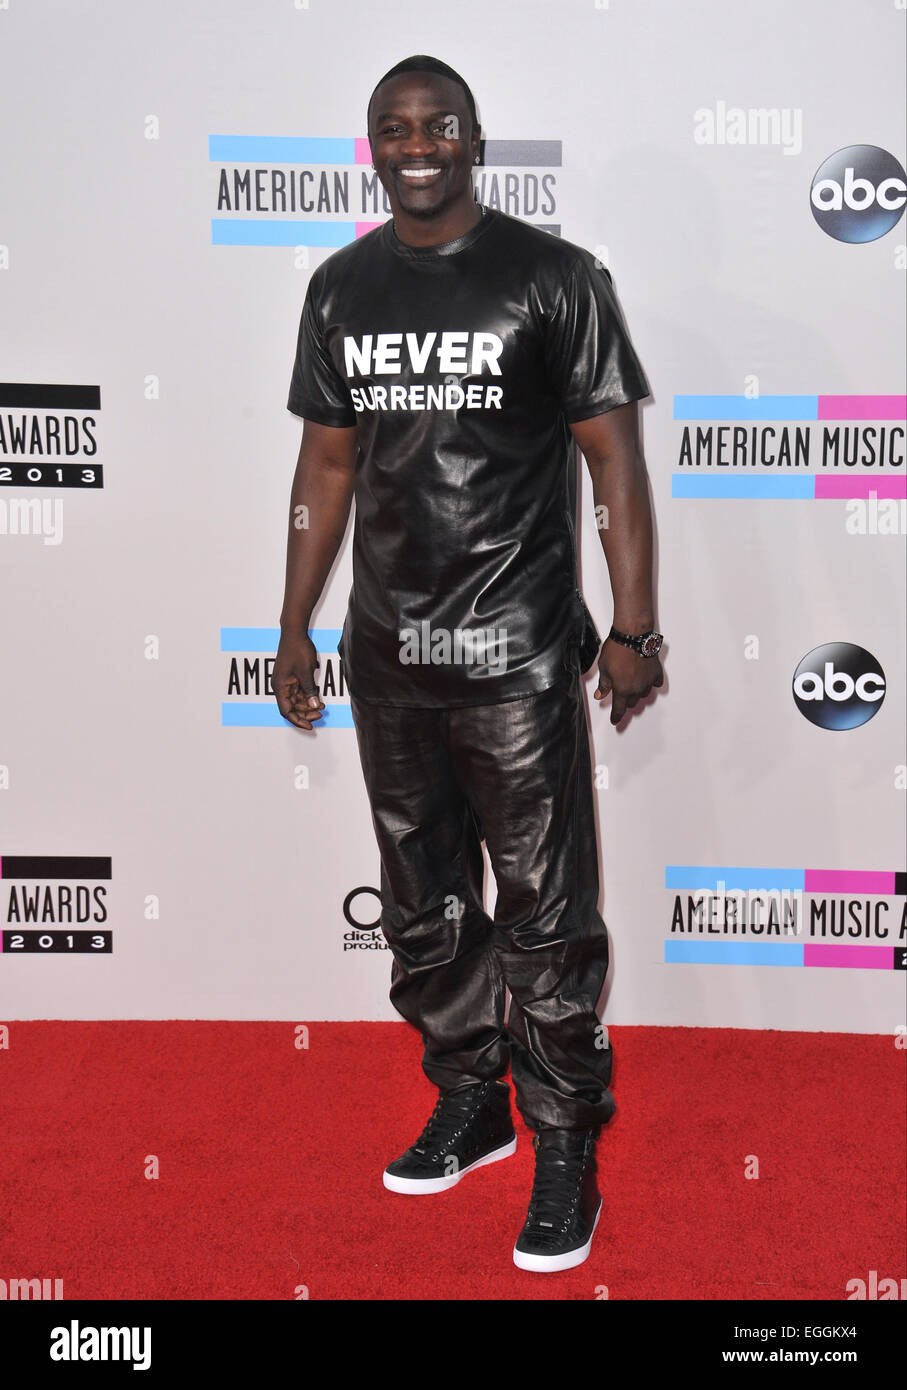 LOS ANGELES, CA - NOVEMBER 24, 2013: Akon at the 2013 American Music Awards at the Nokia Theatre, LA Live. Stock Photo